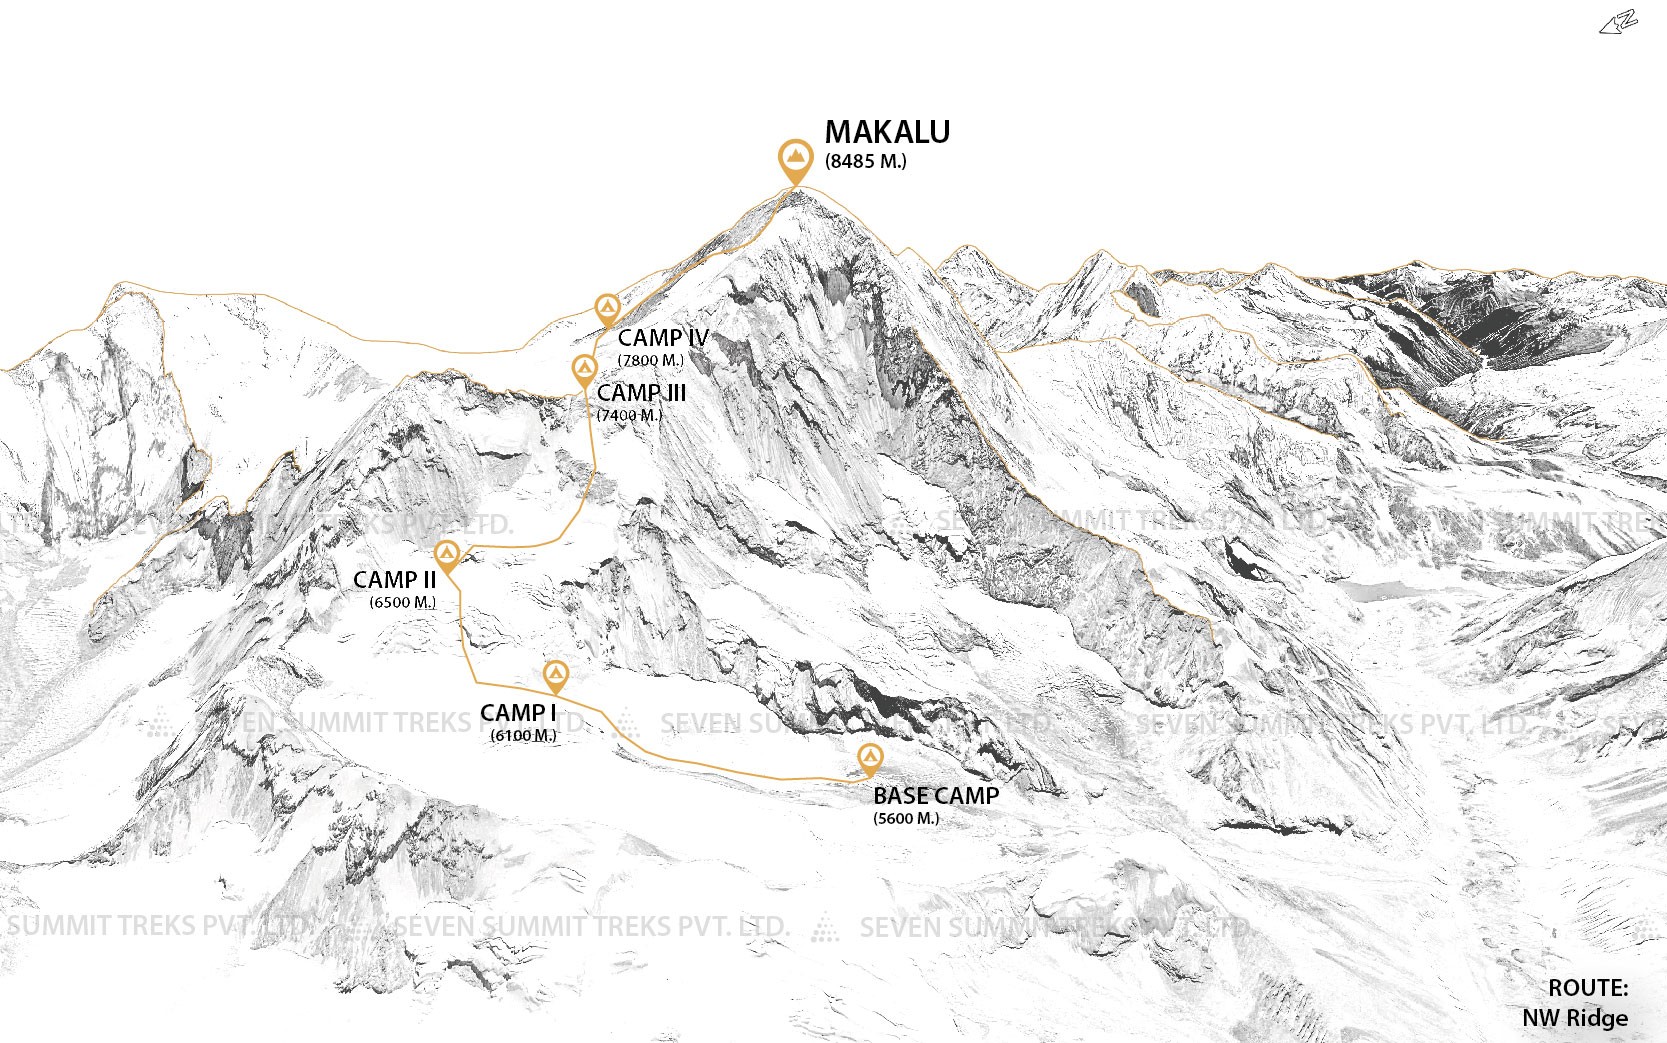 MT. MAKALU EXPEDITION (8485M)